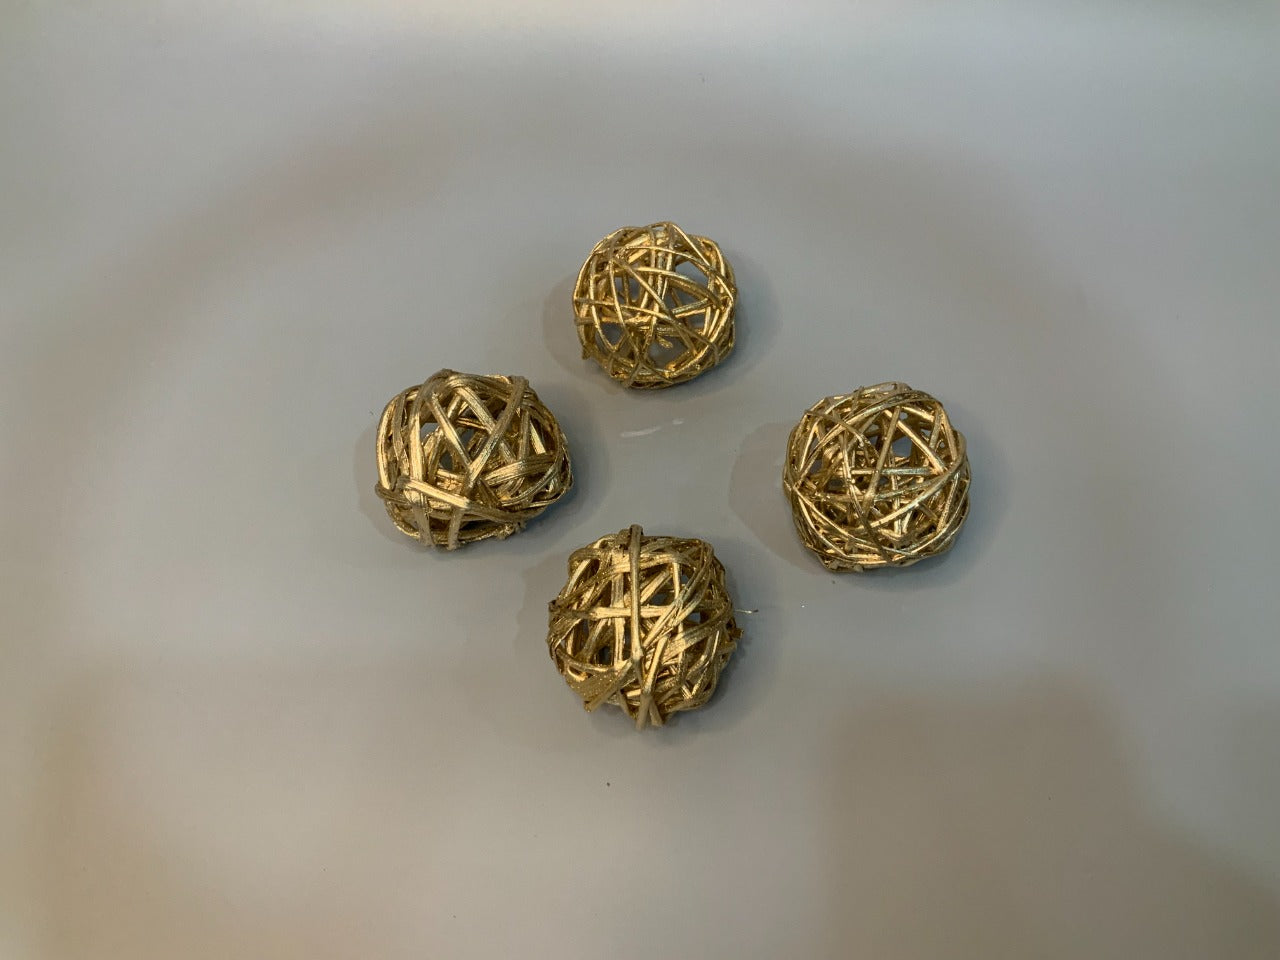 Wicker Ball 8 Cms Gold Silver | Pack of 6 Pcs | Art and Craft | DIY Decor | Woven Decorative Balls | 100% Natural | Bowl Filler | Craft Balls